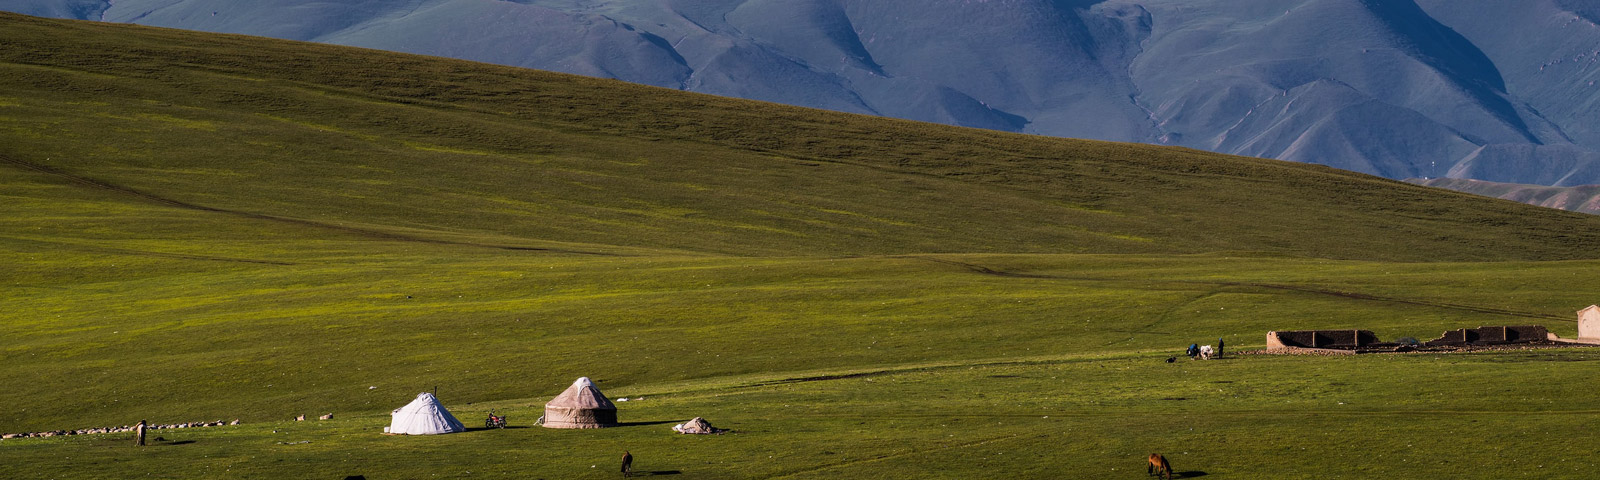 kazakhstan-kyrgyzstan Photography Tour